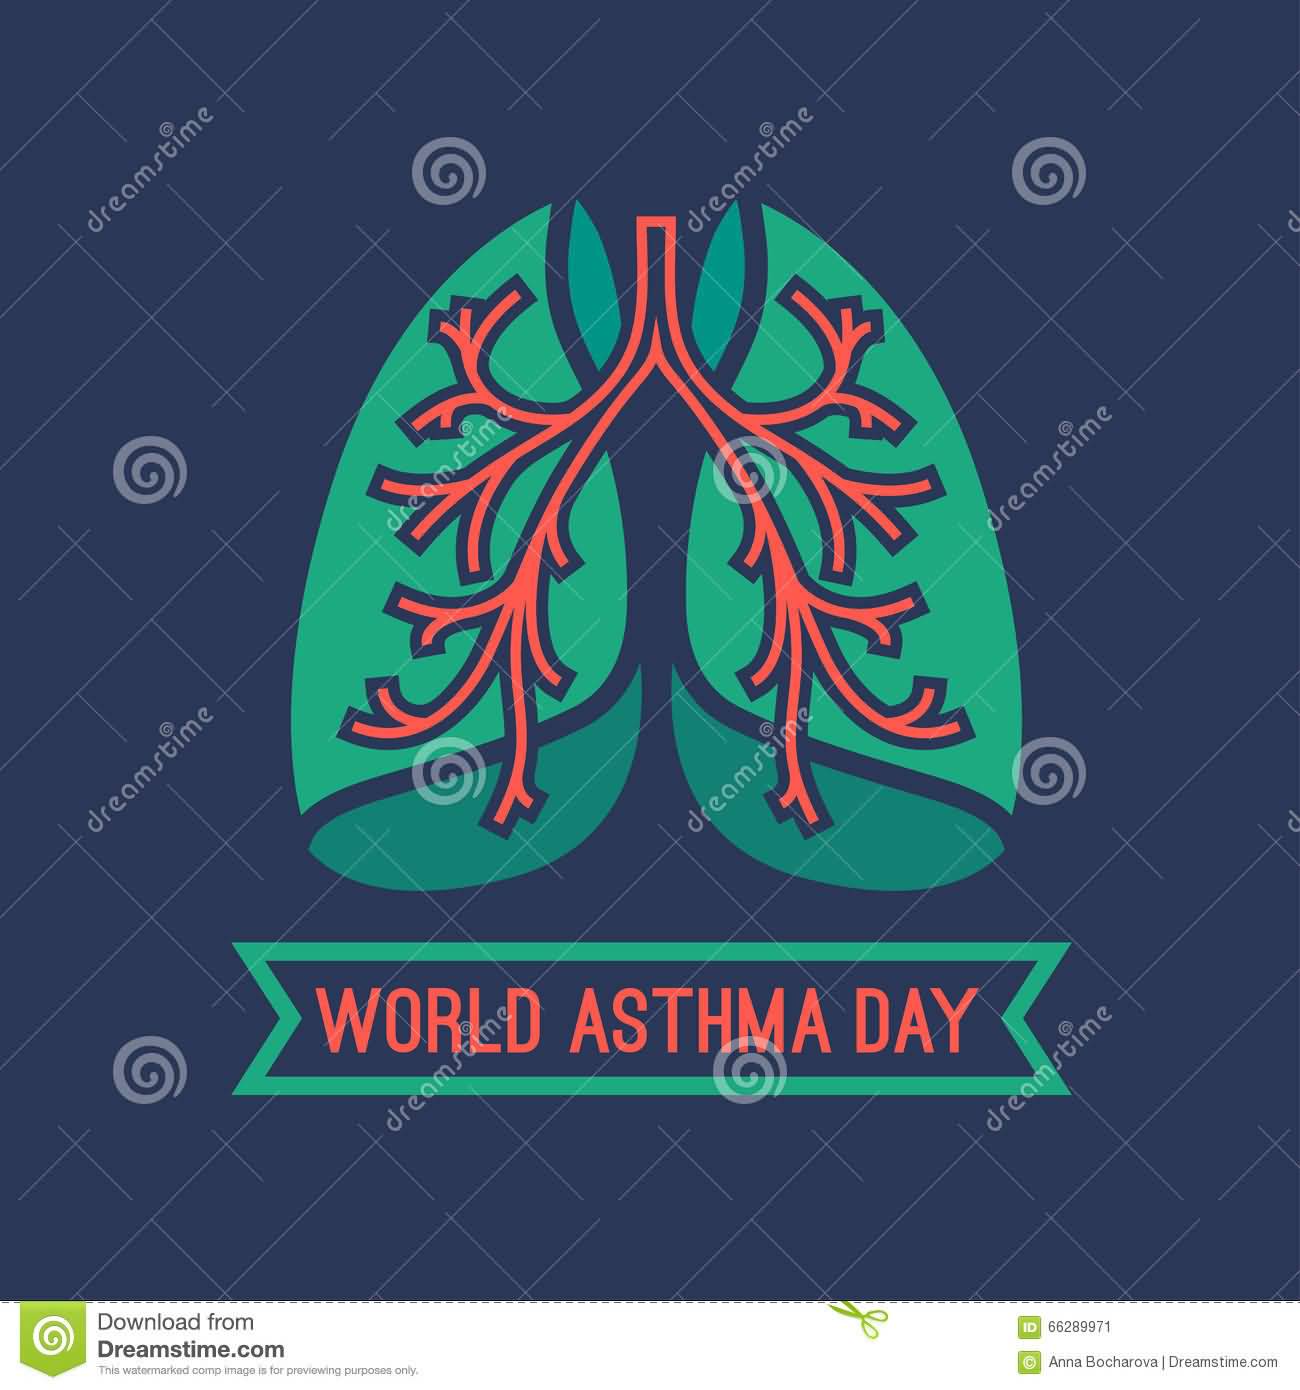 World Asthma Day 2017 Illustration